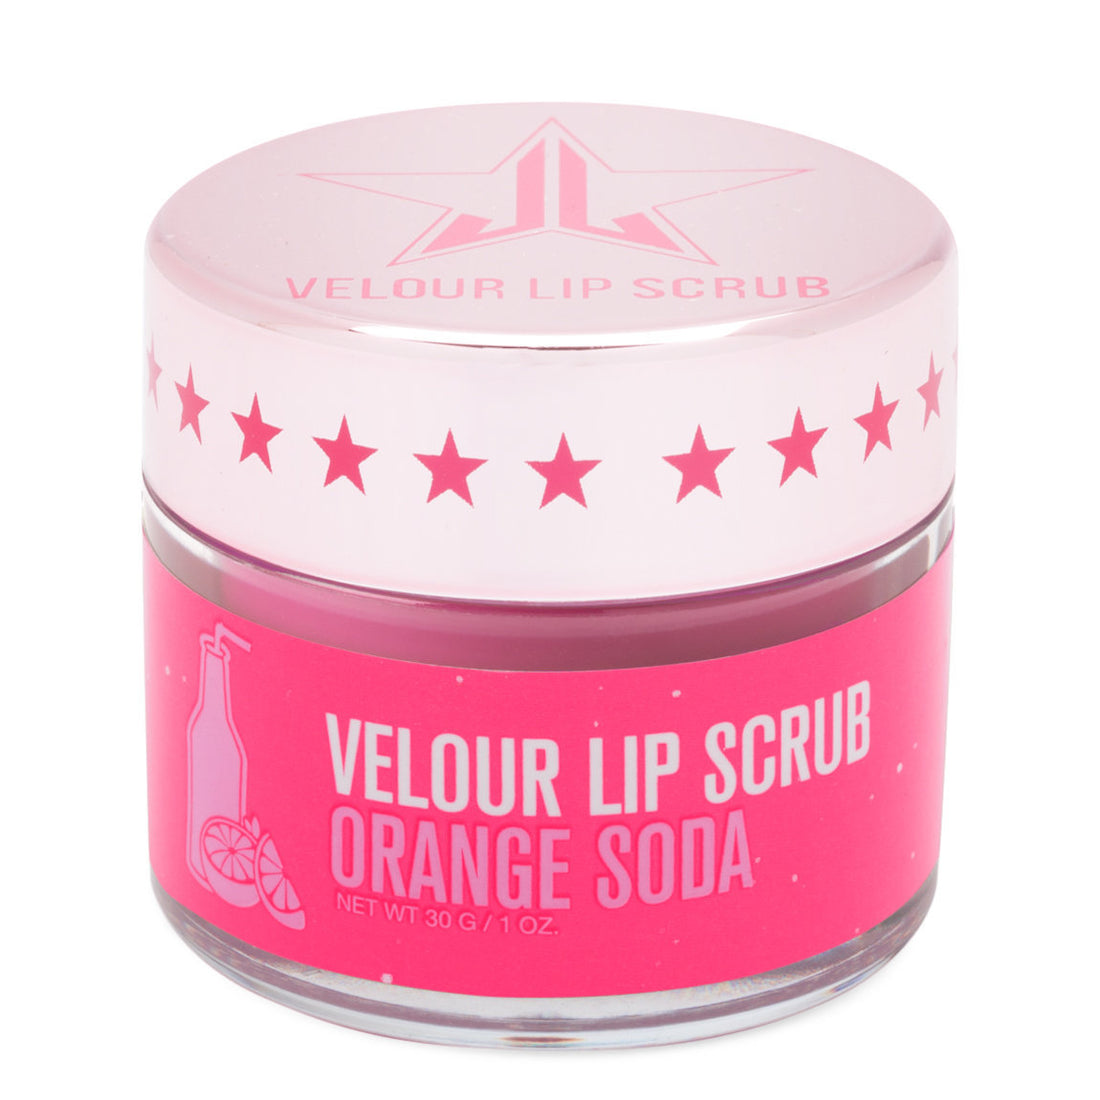 Velour Lip Scrub - Orange Soda